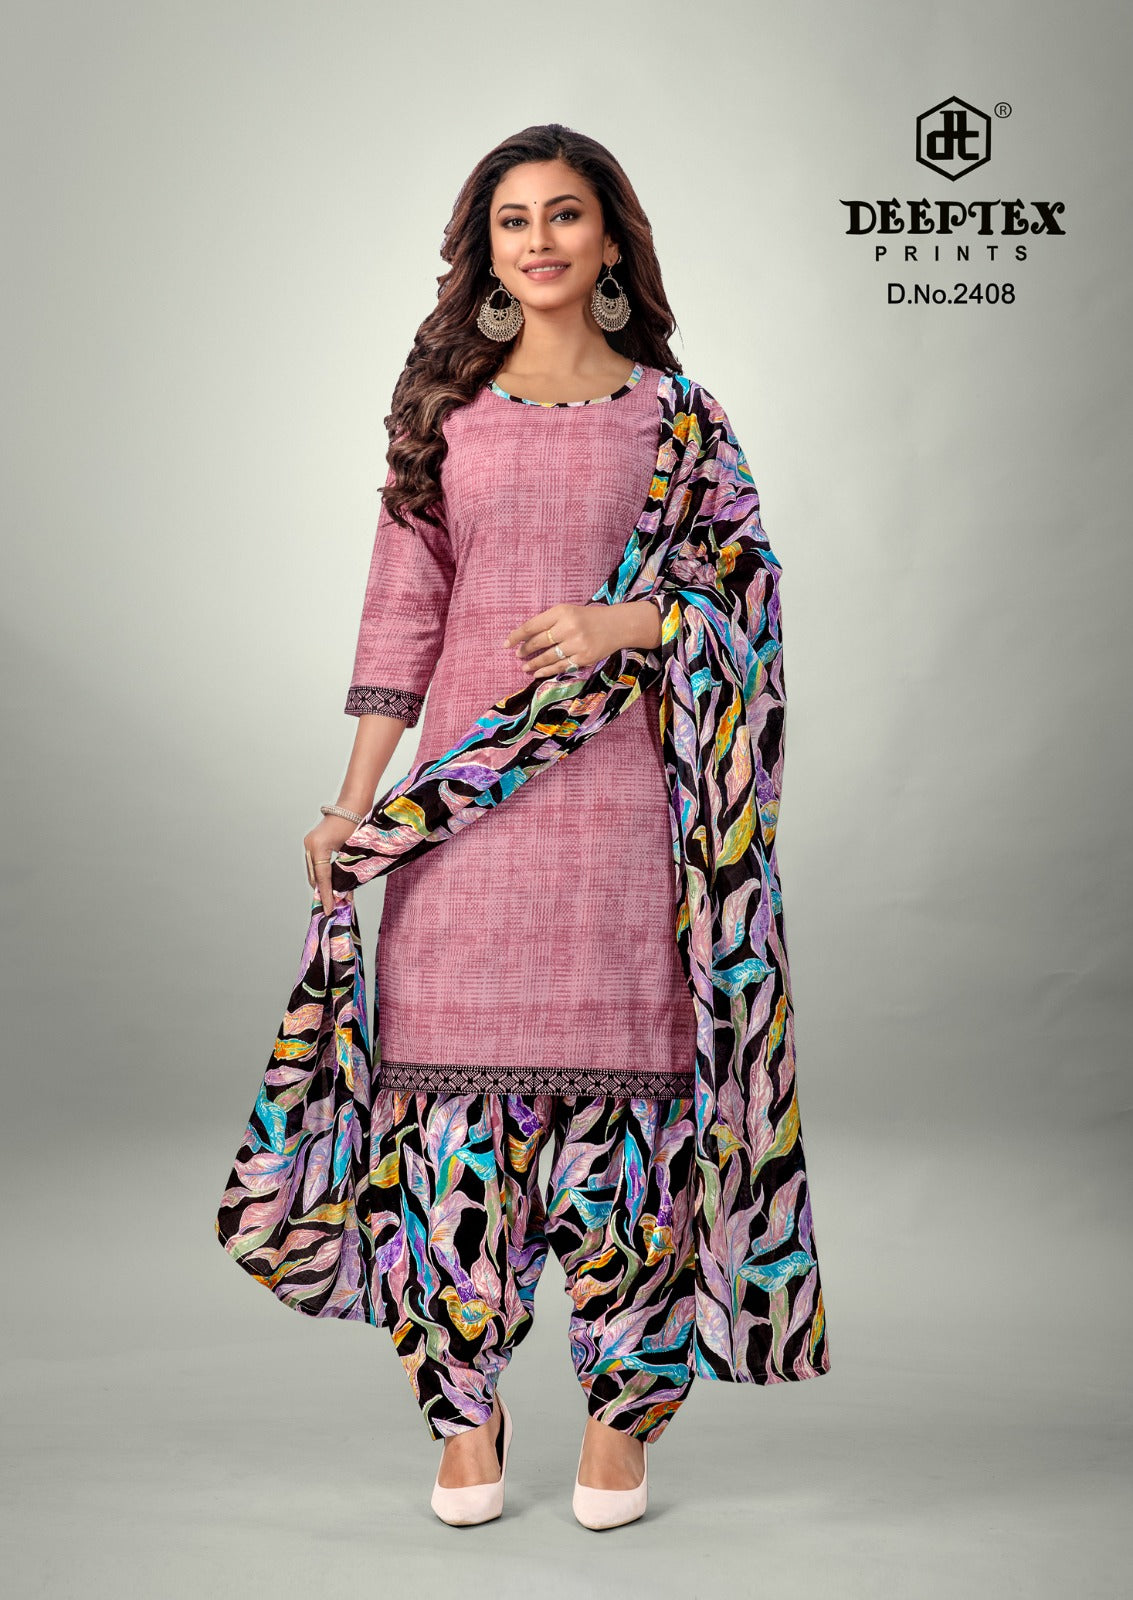 Deeptex Pichkari Vol 24 Cotton Printed Dress Material Wholesale Supplier In Jetpur